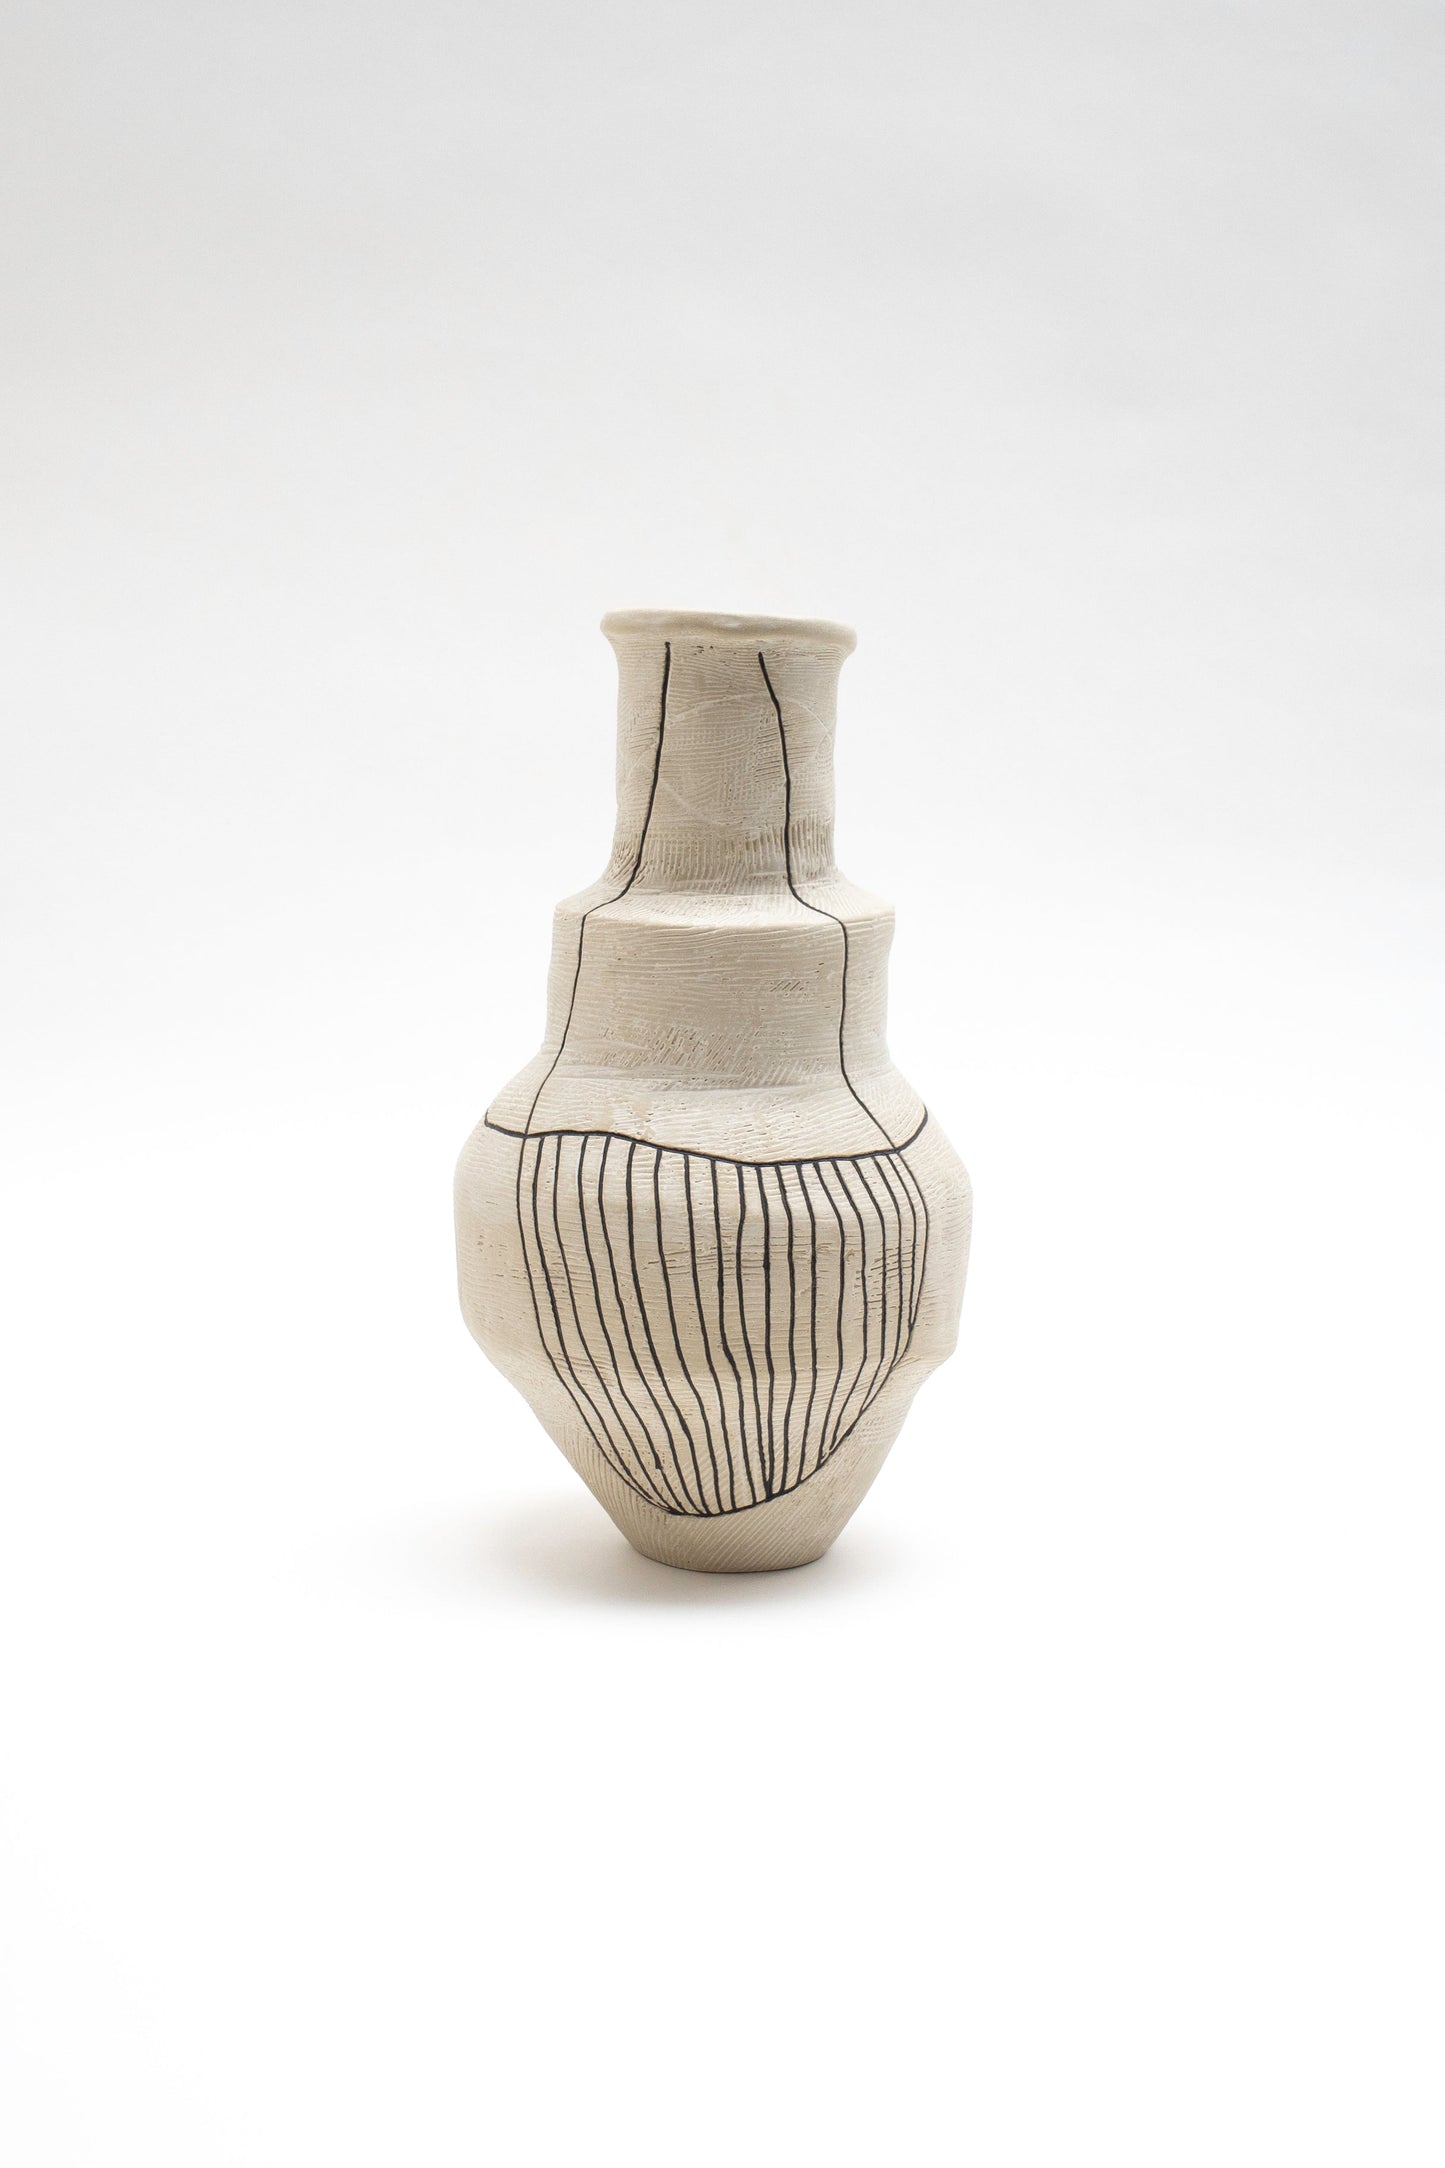 Kuro No. 1 by Egle Simkus Vases